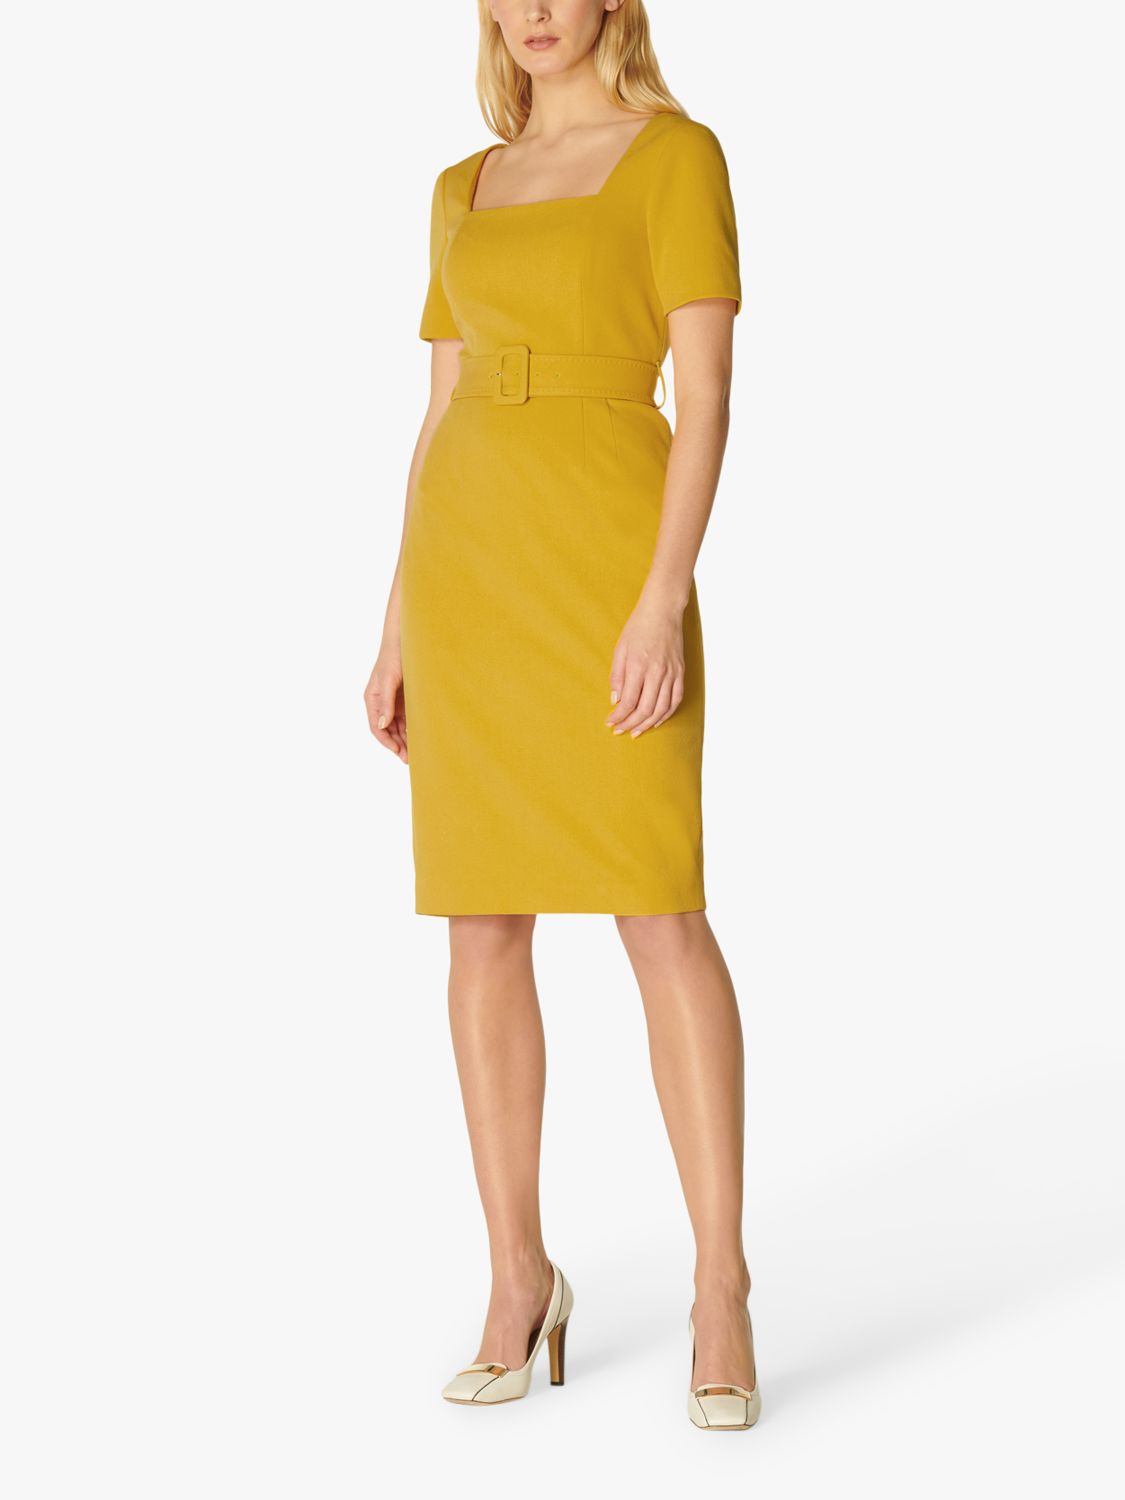 L.K.Bennett Leonora Belted Shift Dress, Yellow at John Lewis & Partners